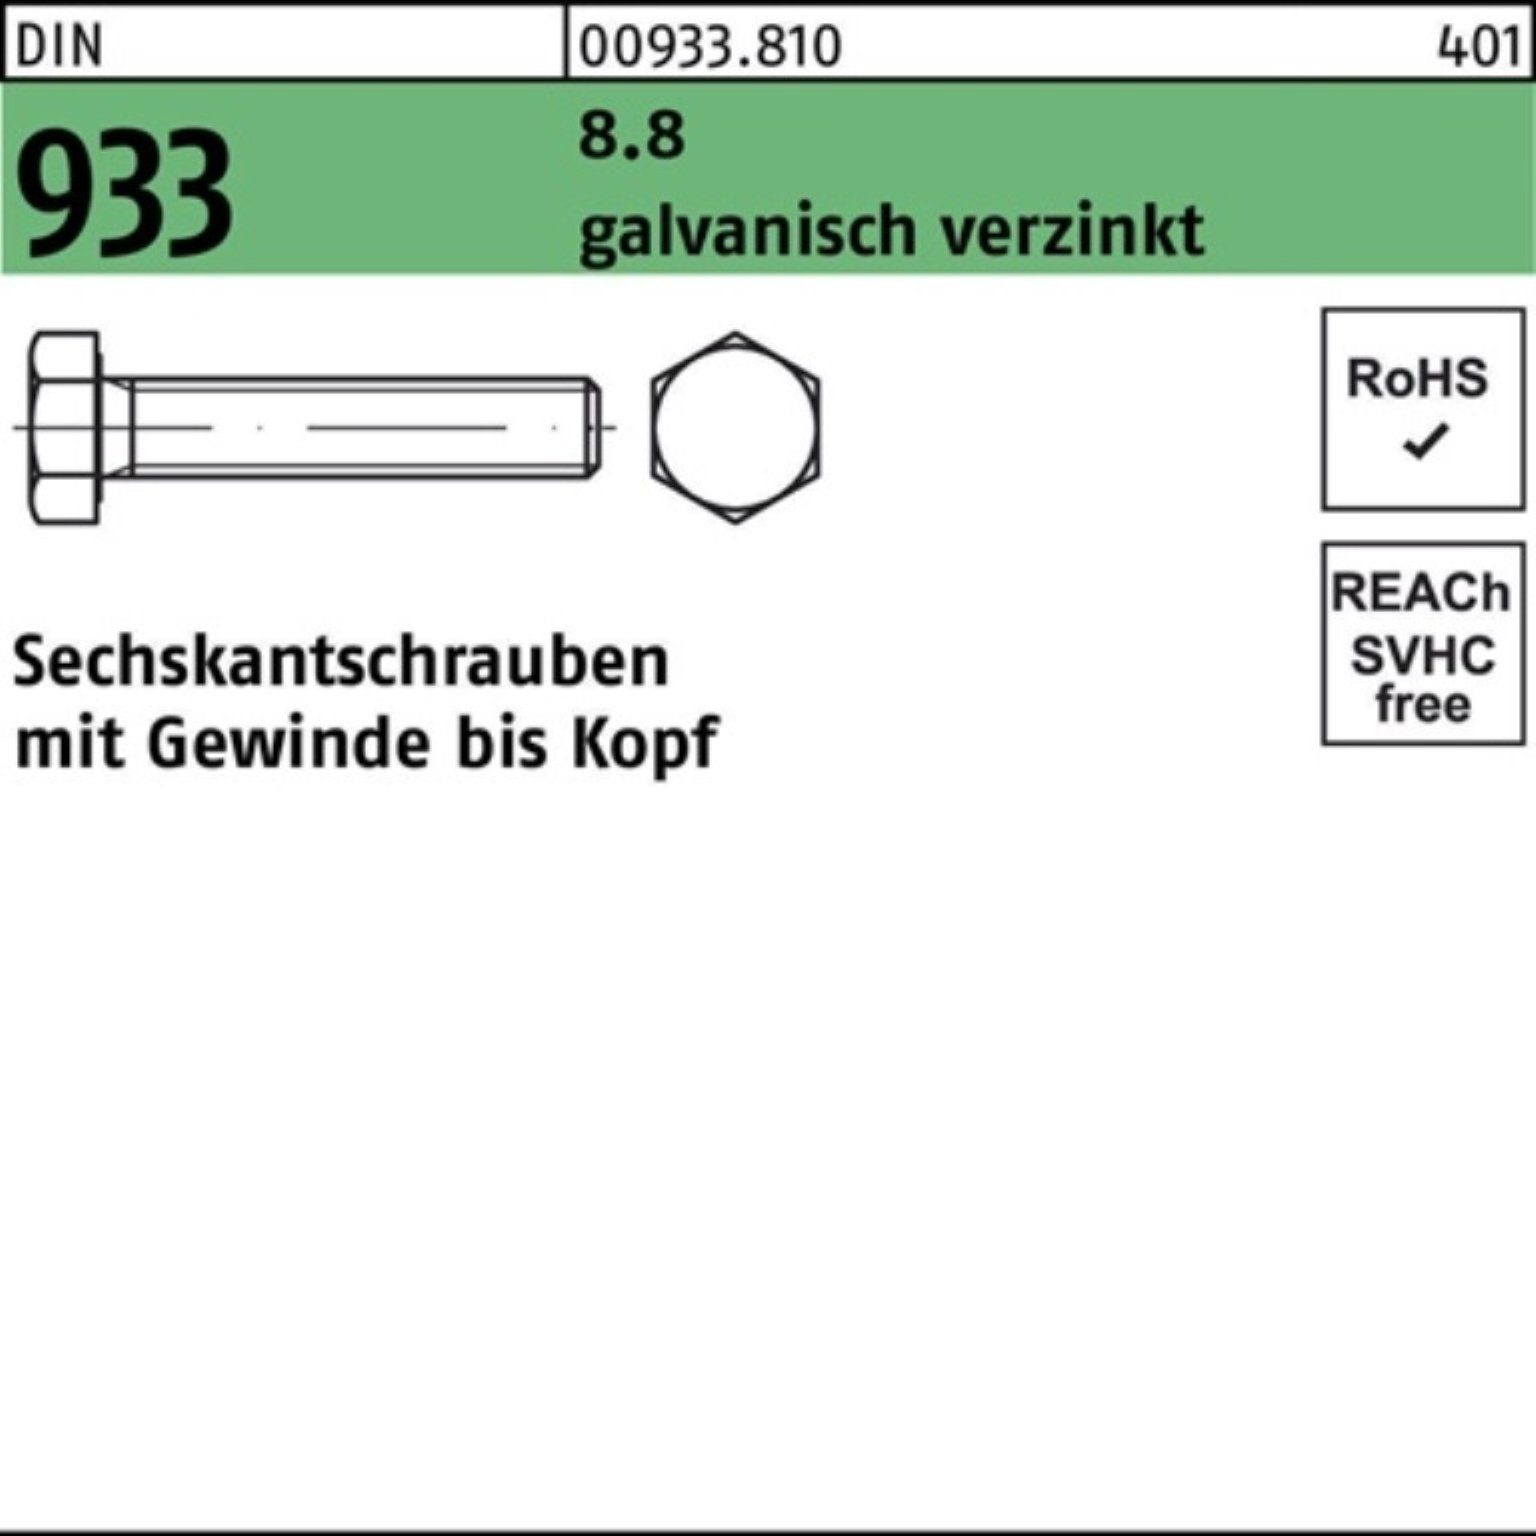 galv.verz. Sechskantschraube Stü 100er 933 10 DIN Sechskantschraube Reyher 45 M27x Pack VG 8.8